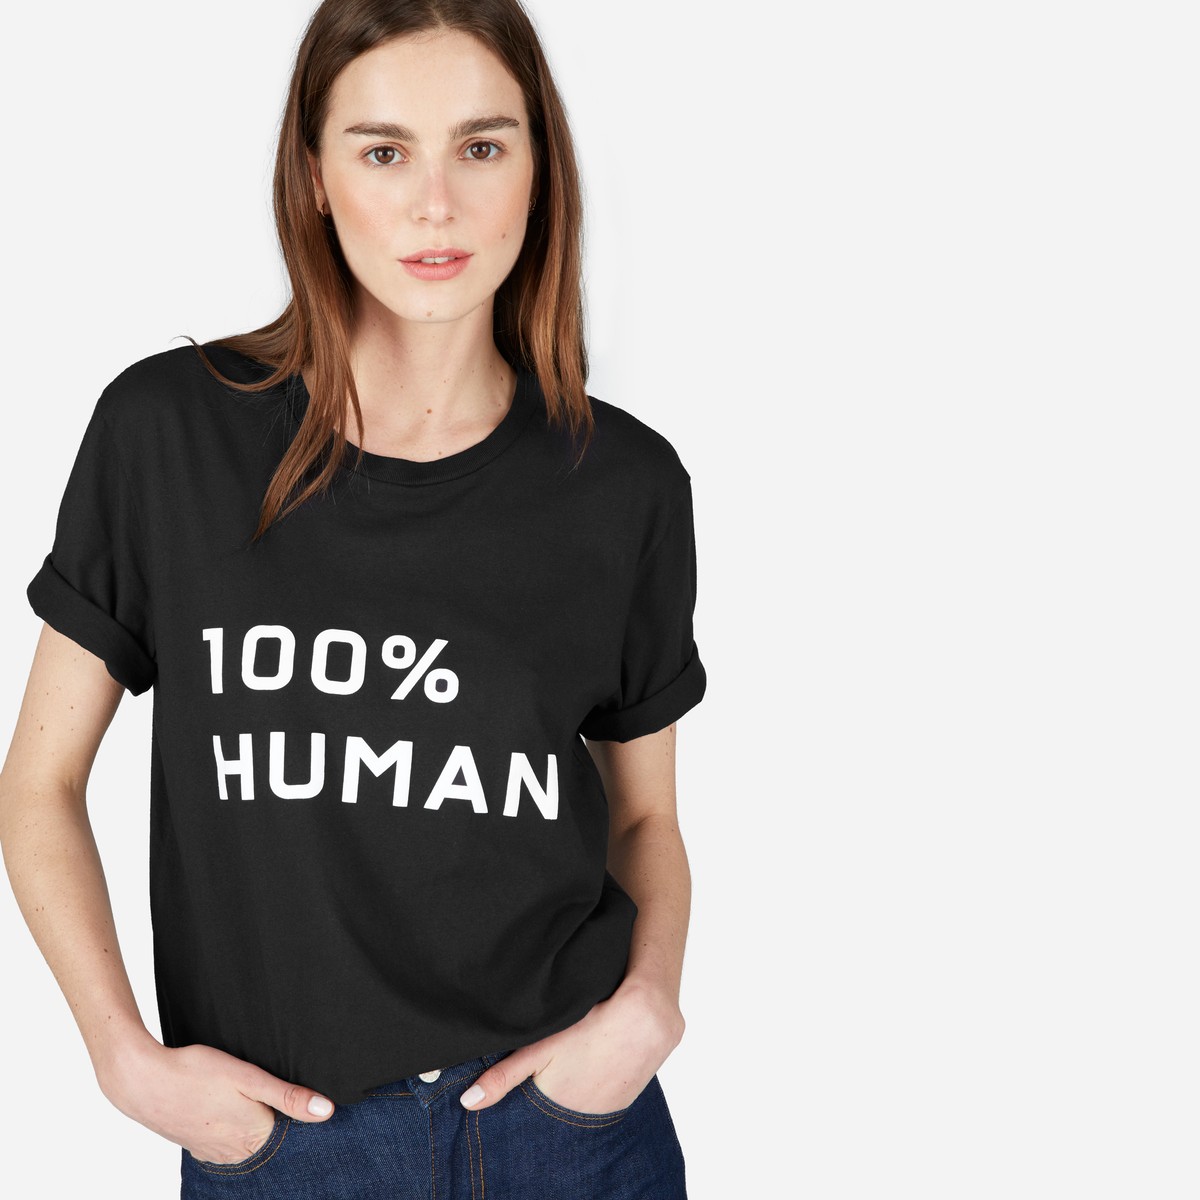 Already sold. 100 % Human футболка коллекция Everlane 100% Human. Люди унисекс. Хьюмен мейд футболка. Everlane лого.